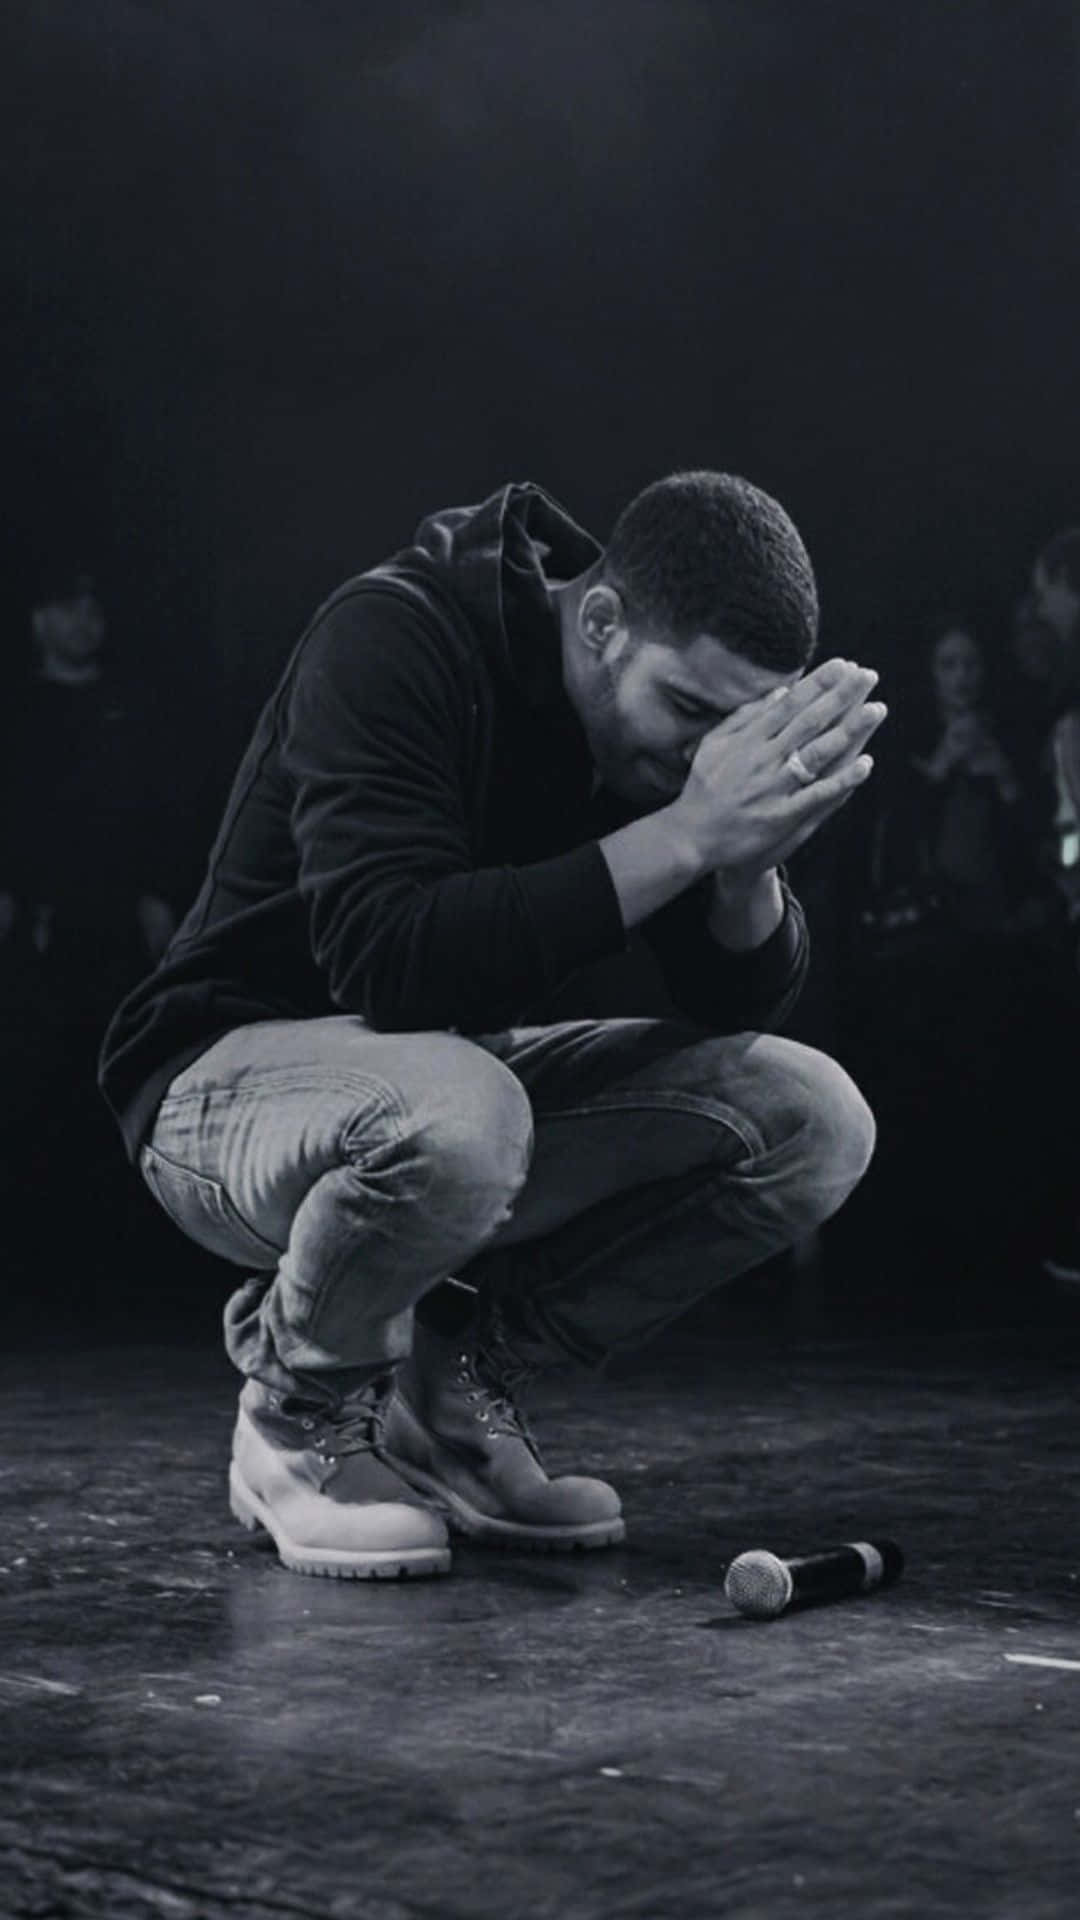 Drake Shown in Dreamy Aesthetic Wallpaper